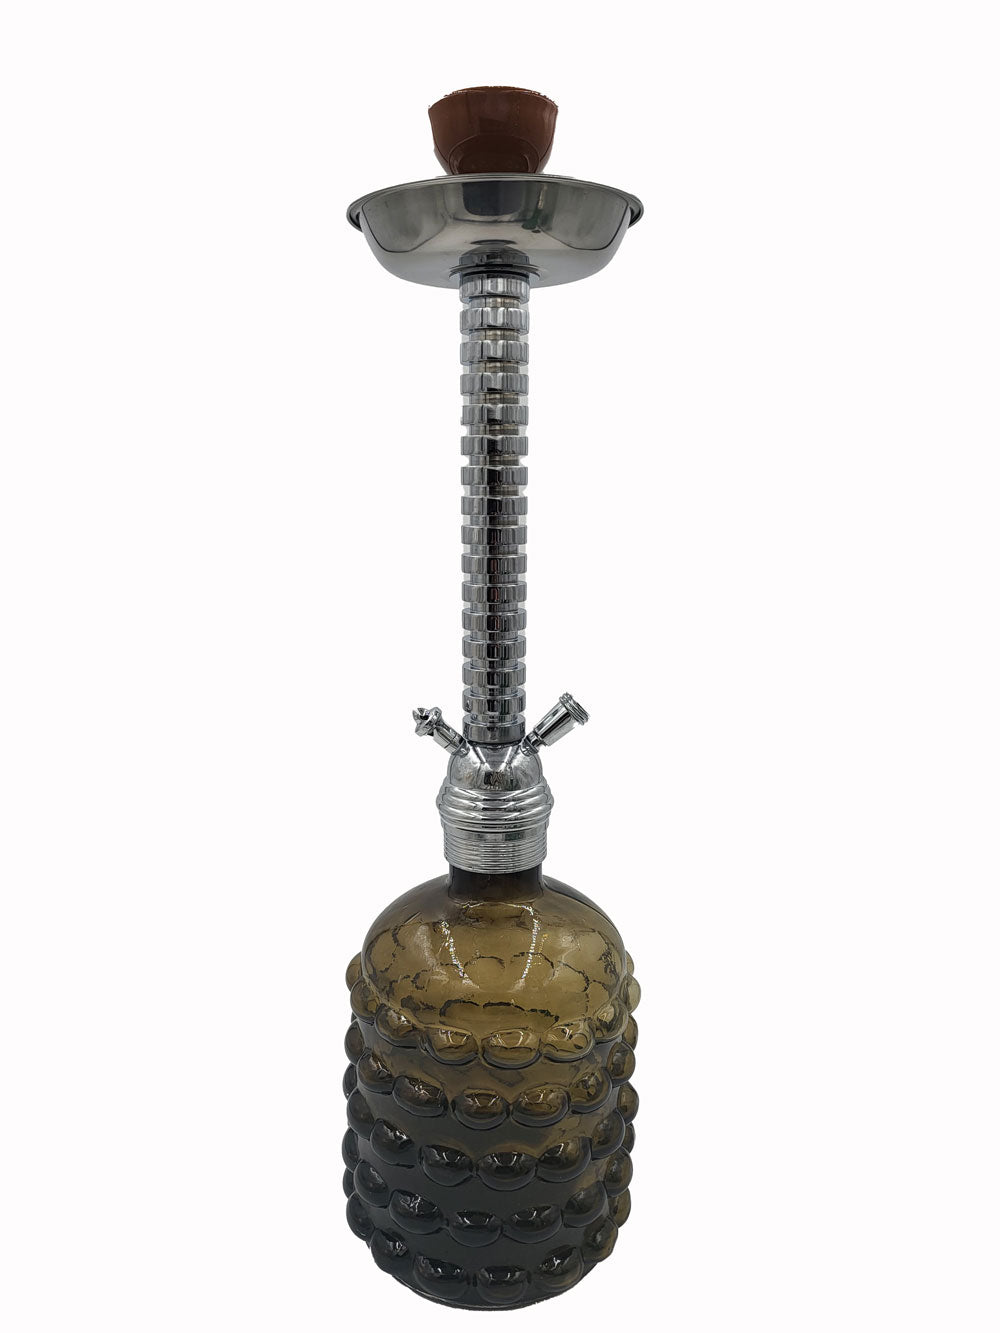 Column style hookah stem with large jug base